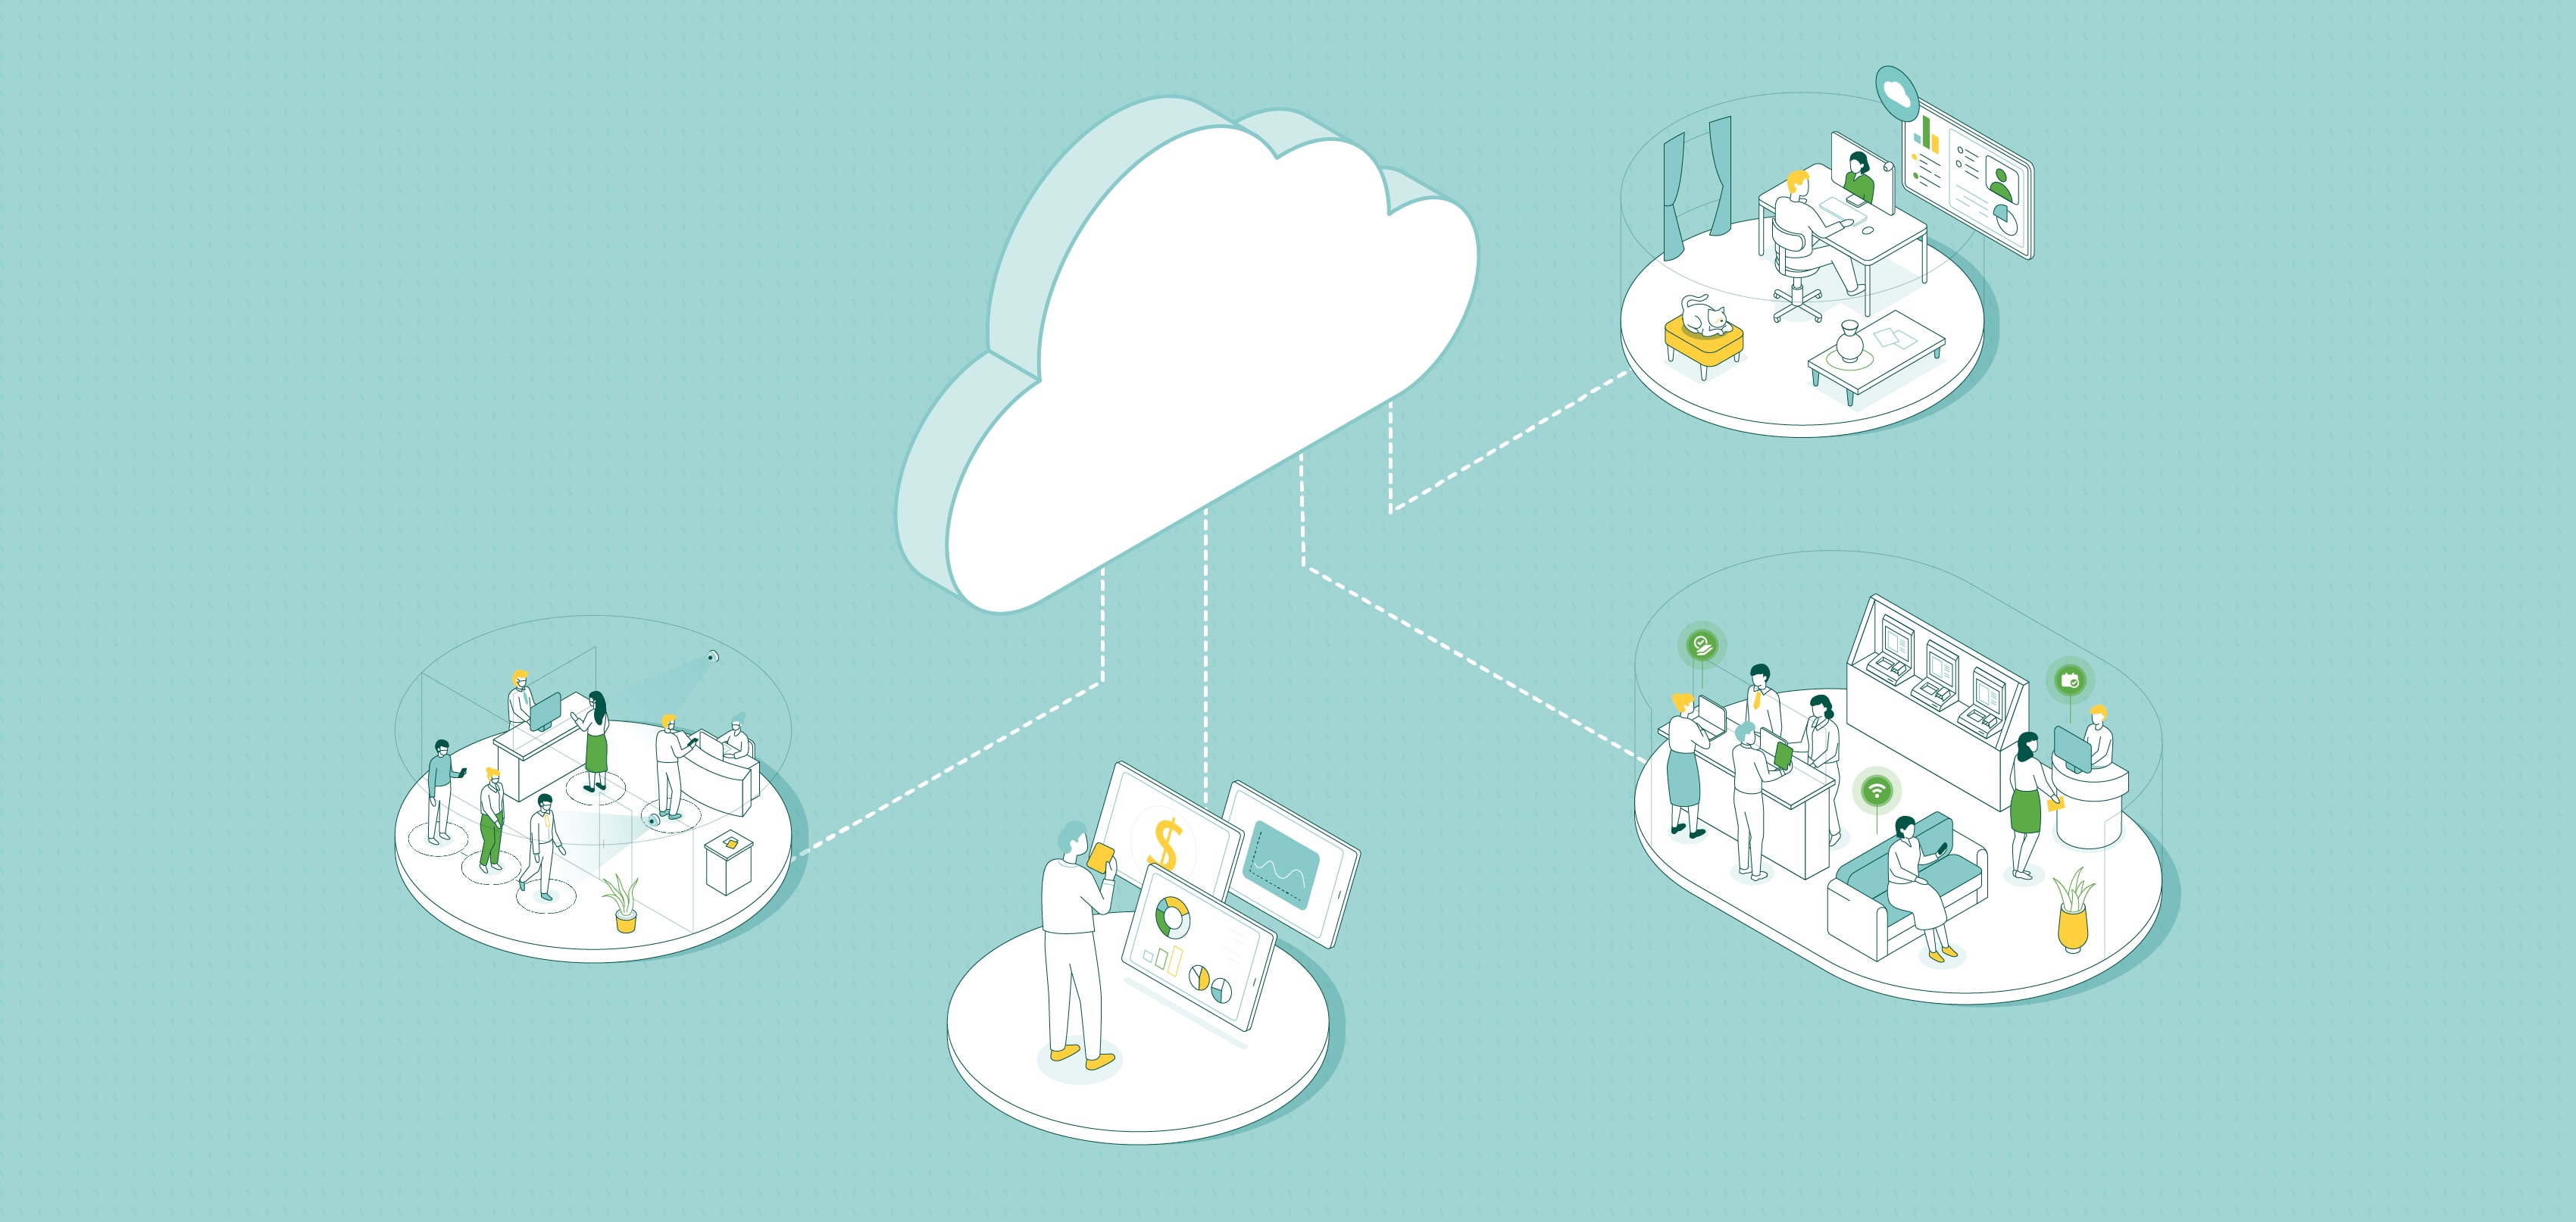 Banking transformation through the cloud illustration